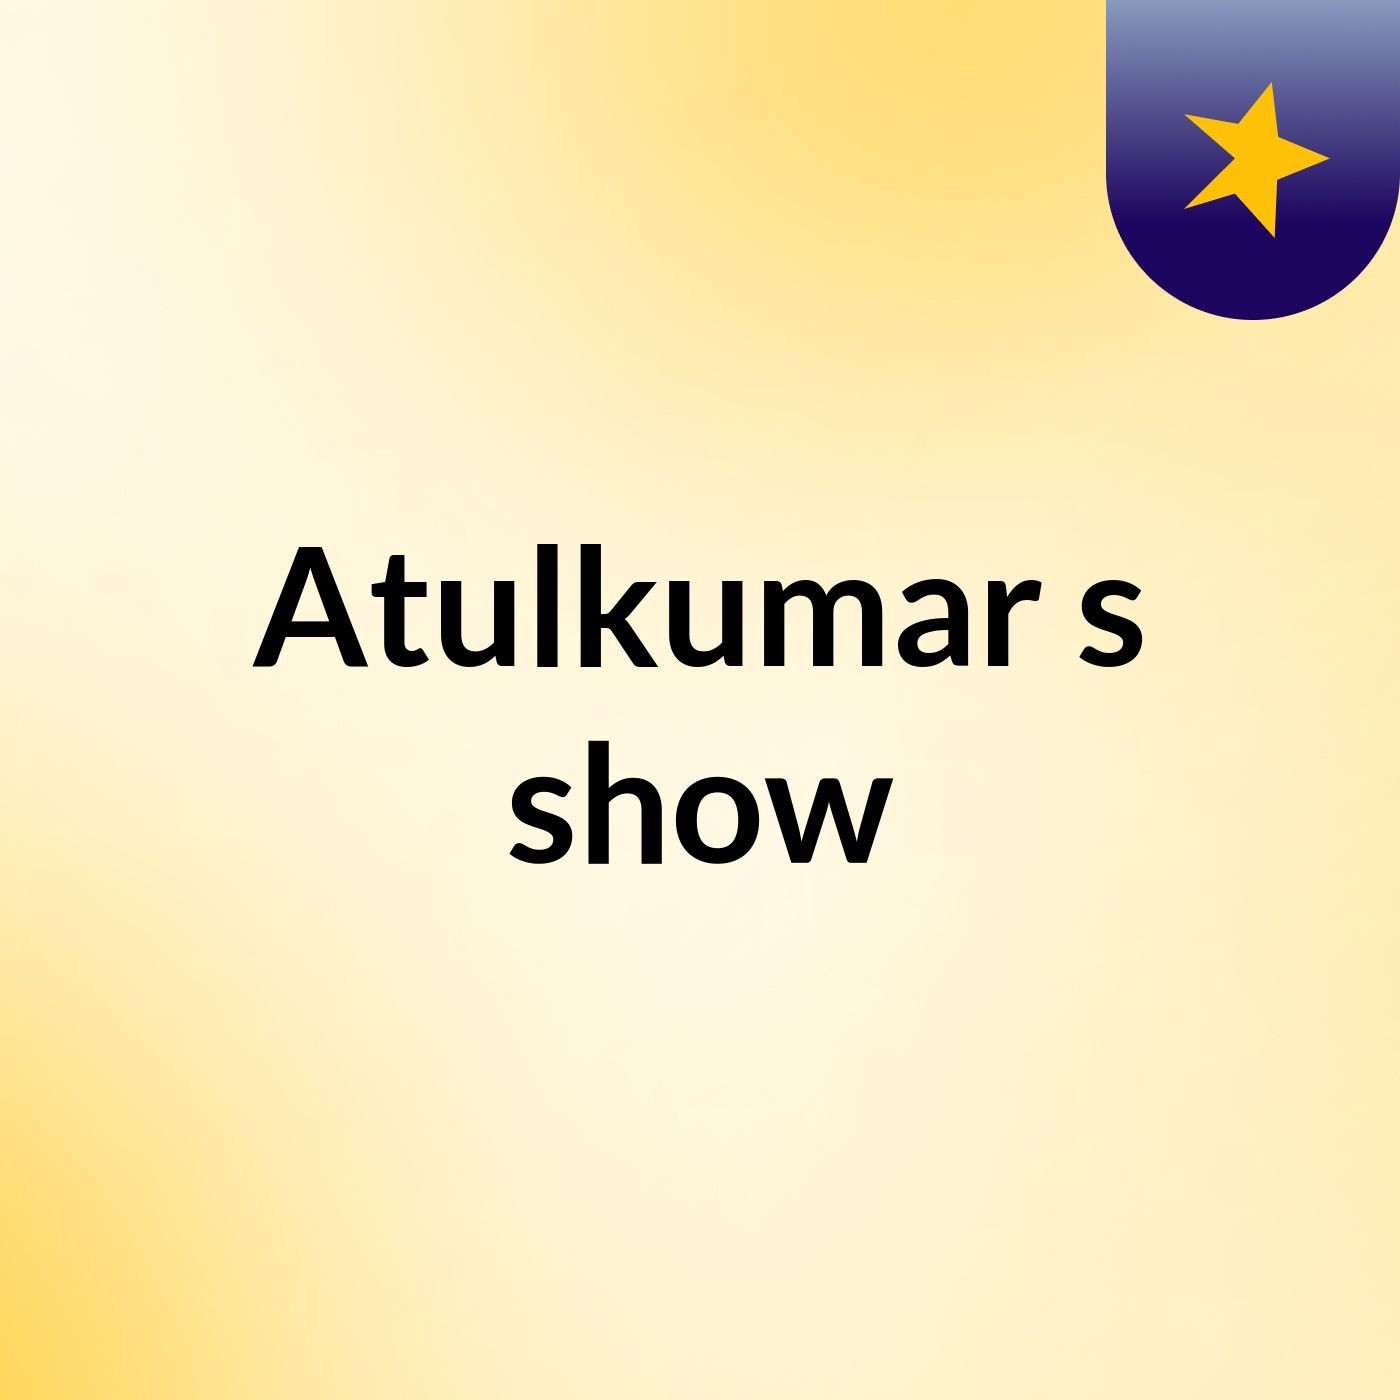 Atulkumar's show